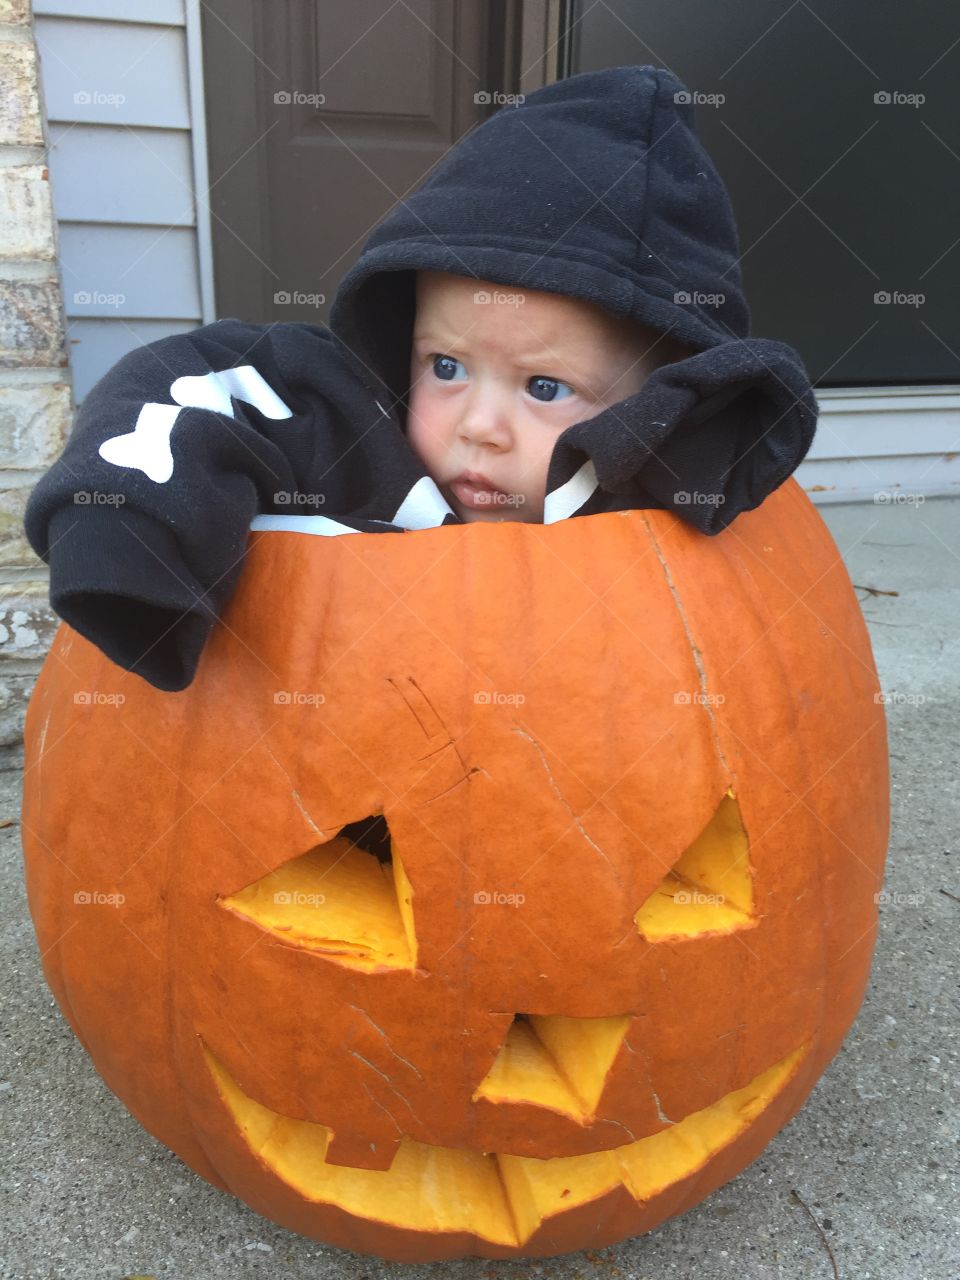 Spookily the pumpkin